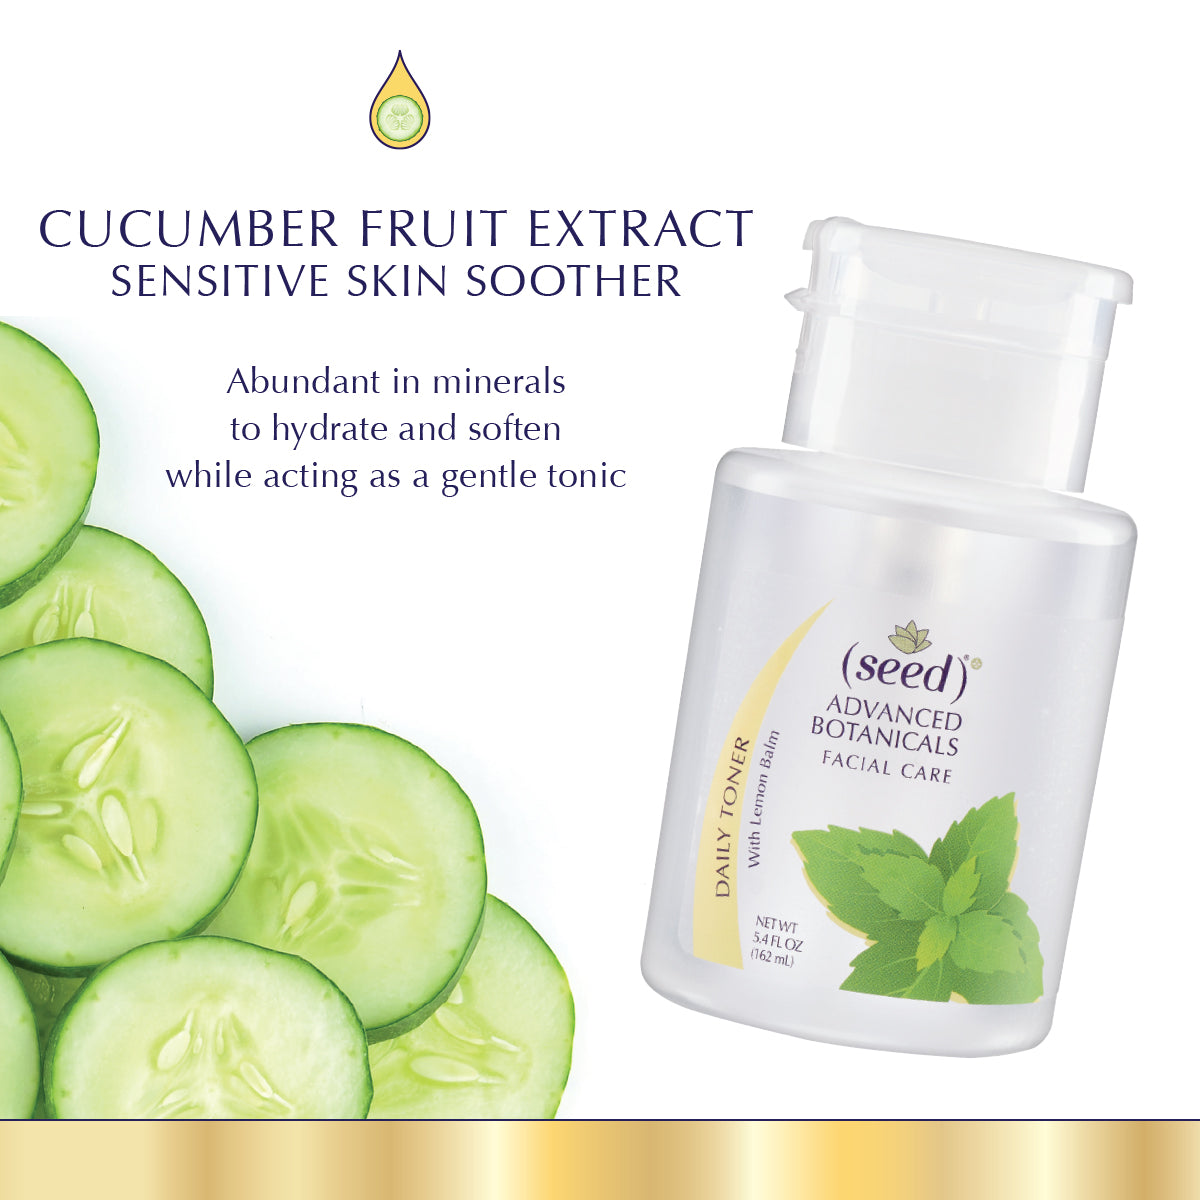 Seed Advanced Botanicals Lemon Balm Face Toner features Cucumber Fruit Extract